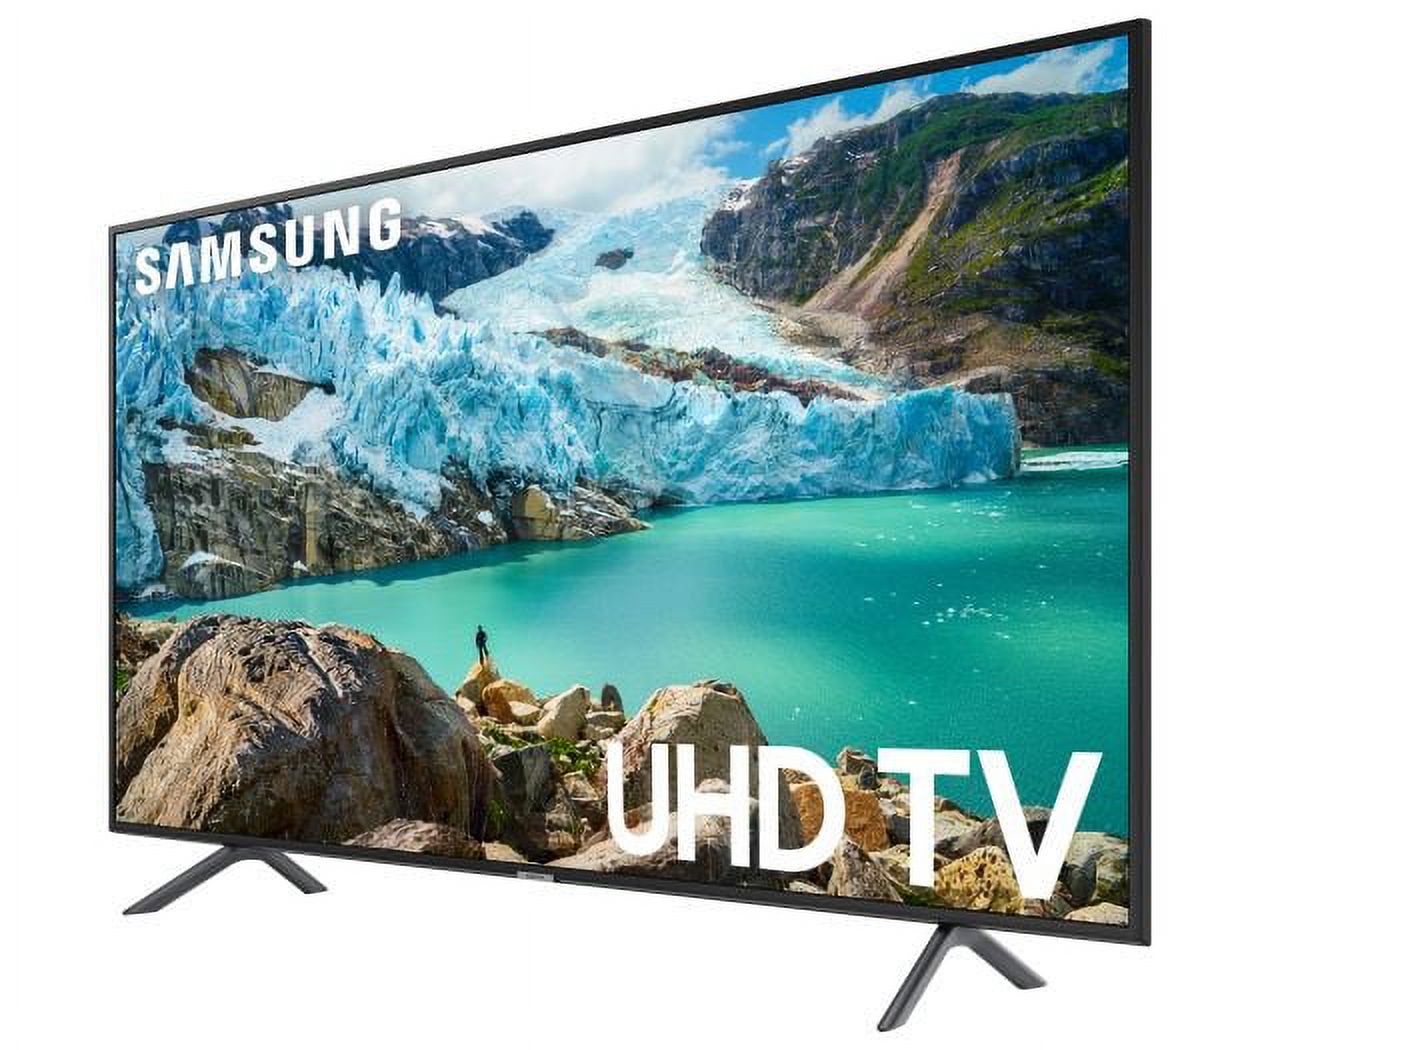 SAMSUNG 58" Class 4K Ultra HD (2160P) HDR Smart LED TV UN58RU7100 (2019 Model) - image 4 of 9